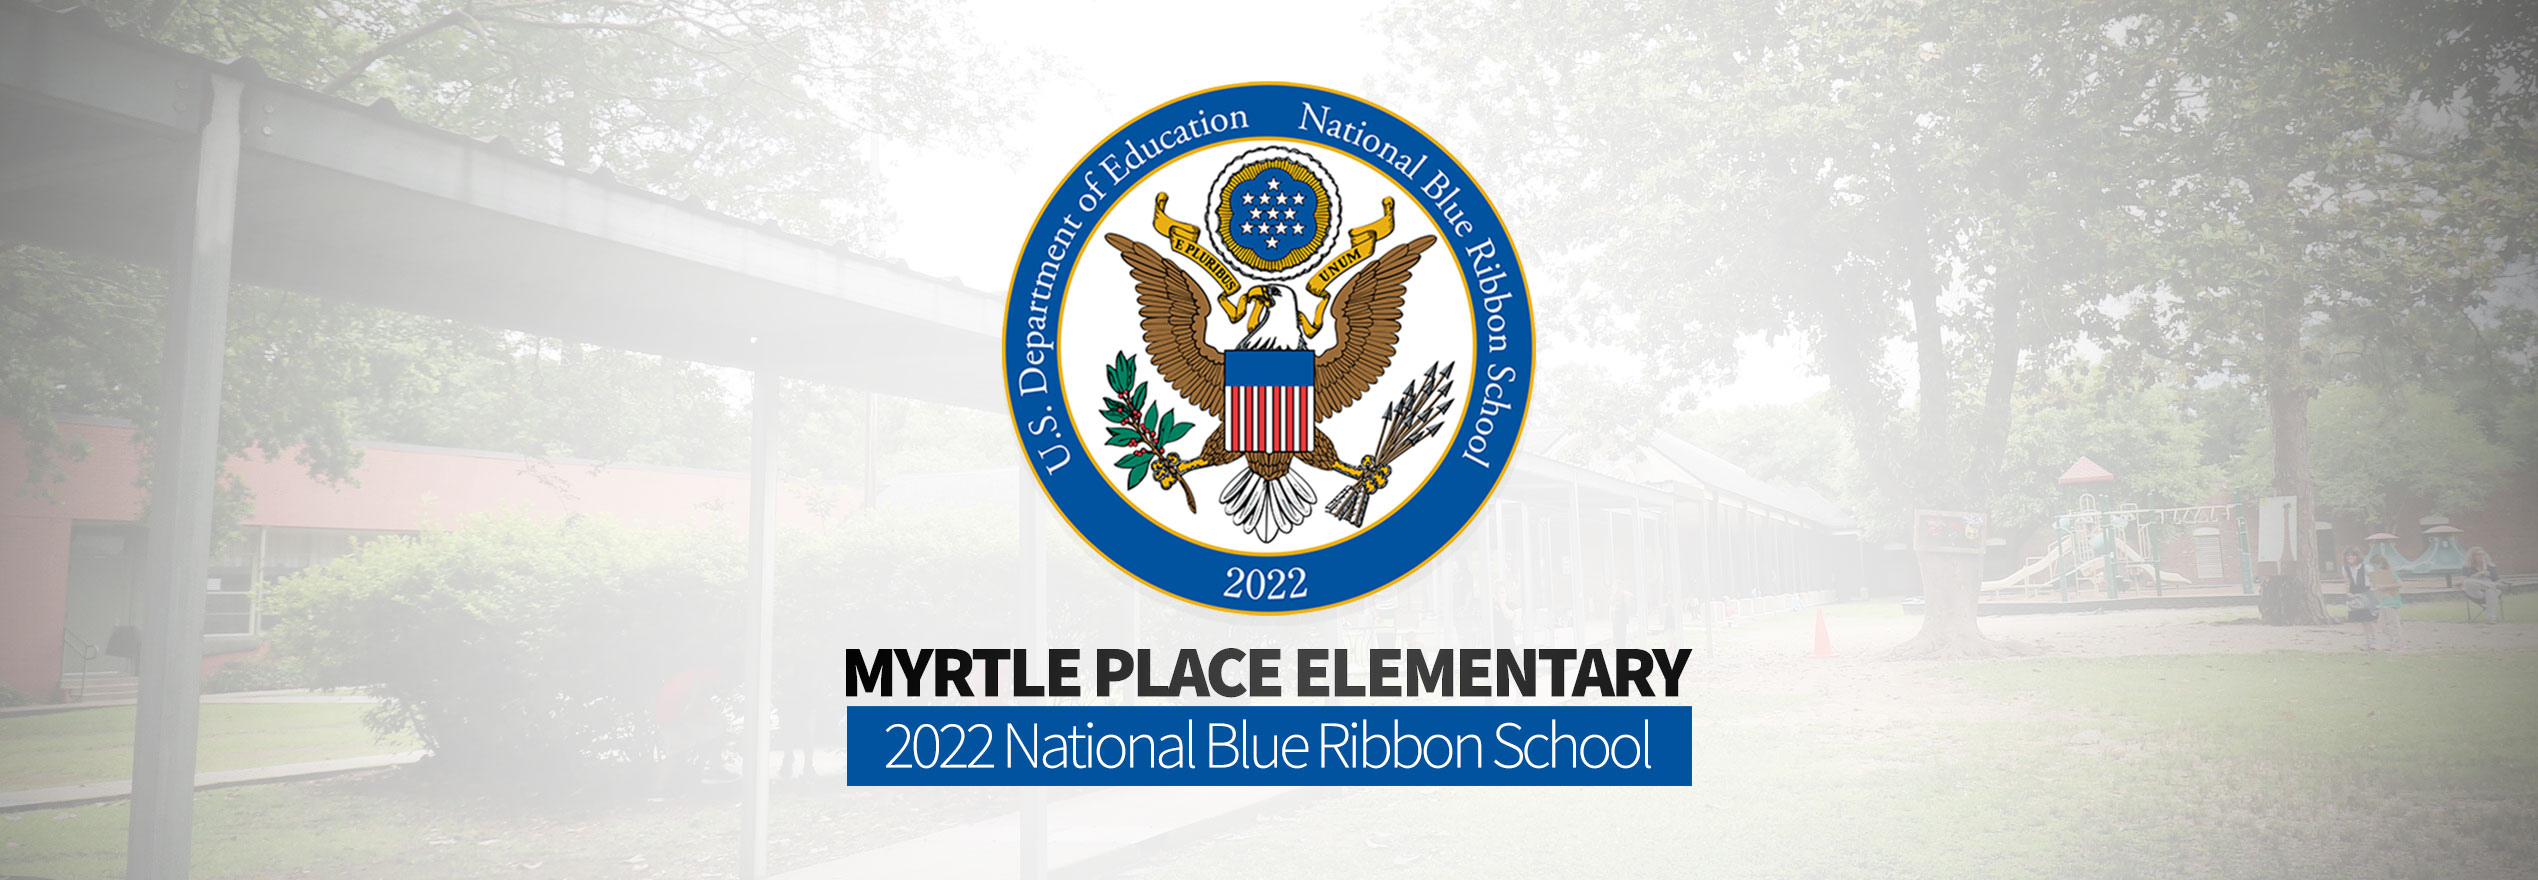 Myrtle Place Elementary Blue Ribbon School 2022